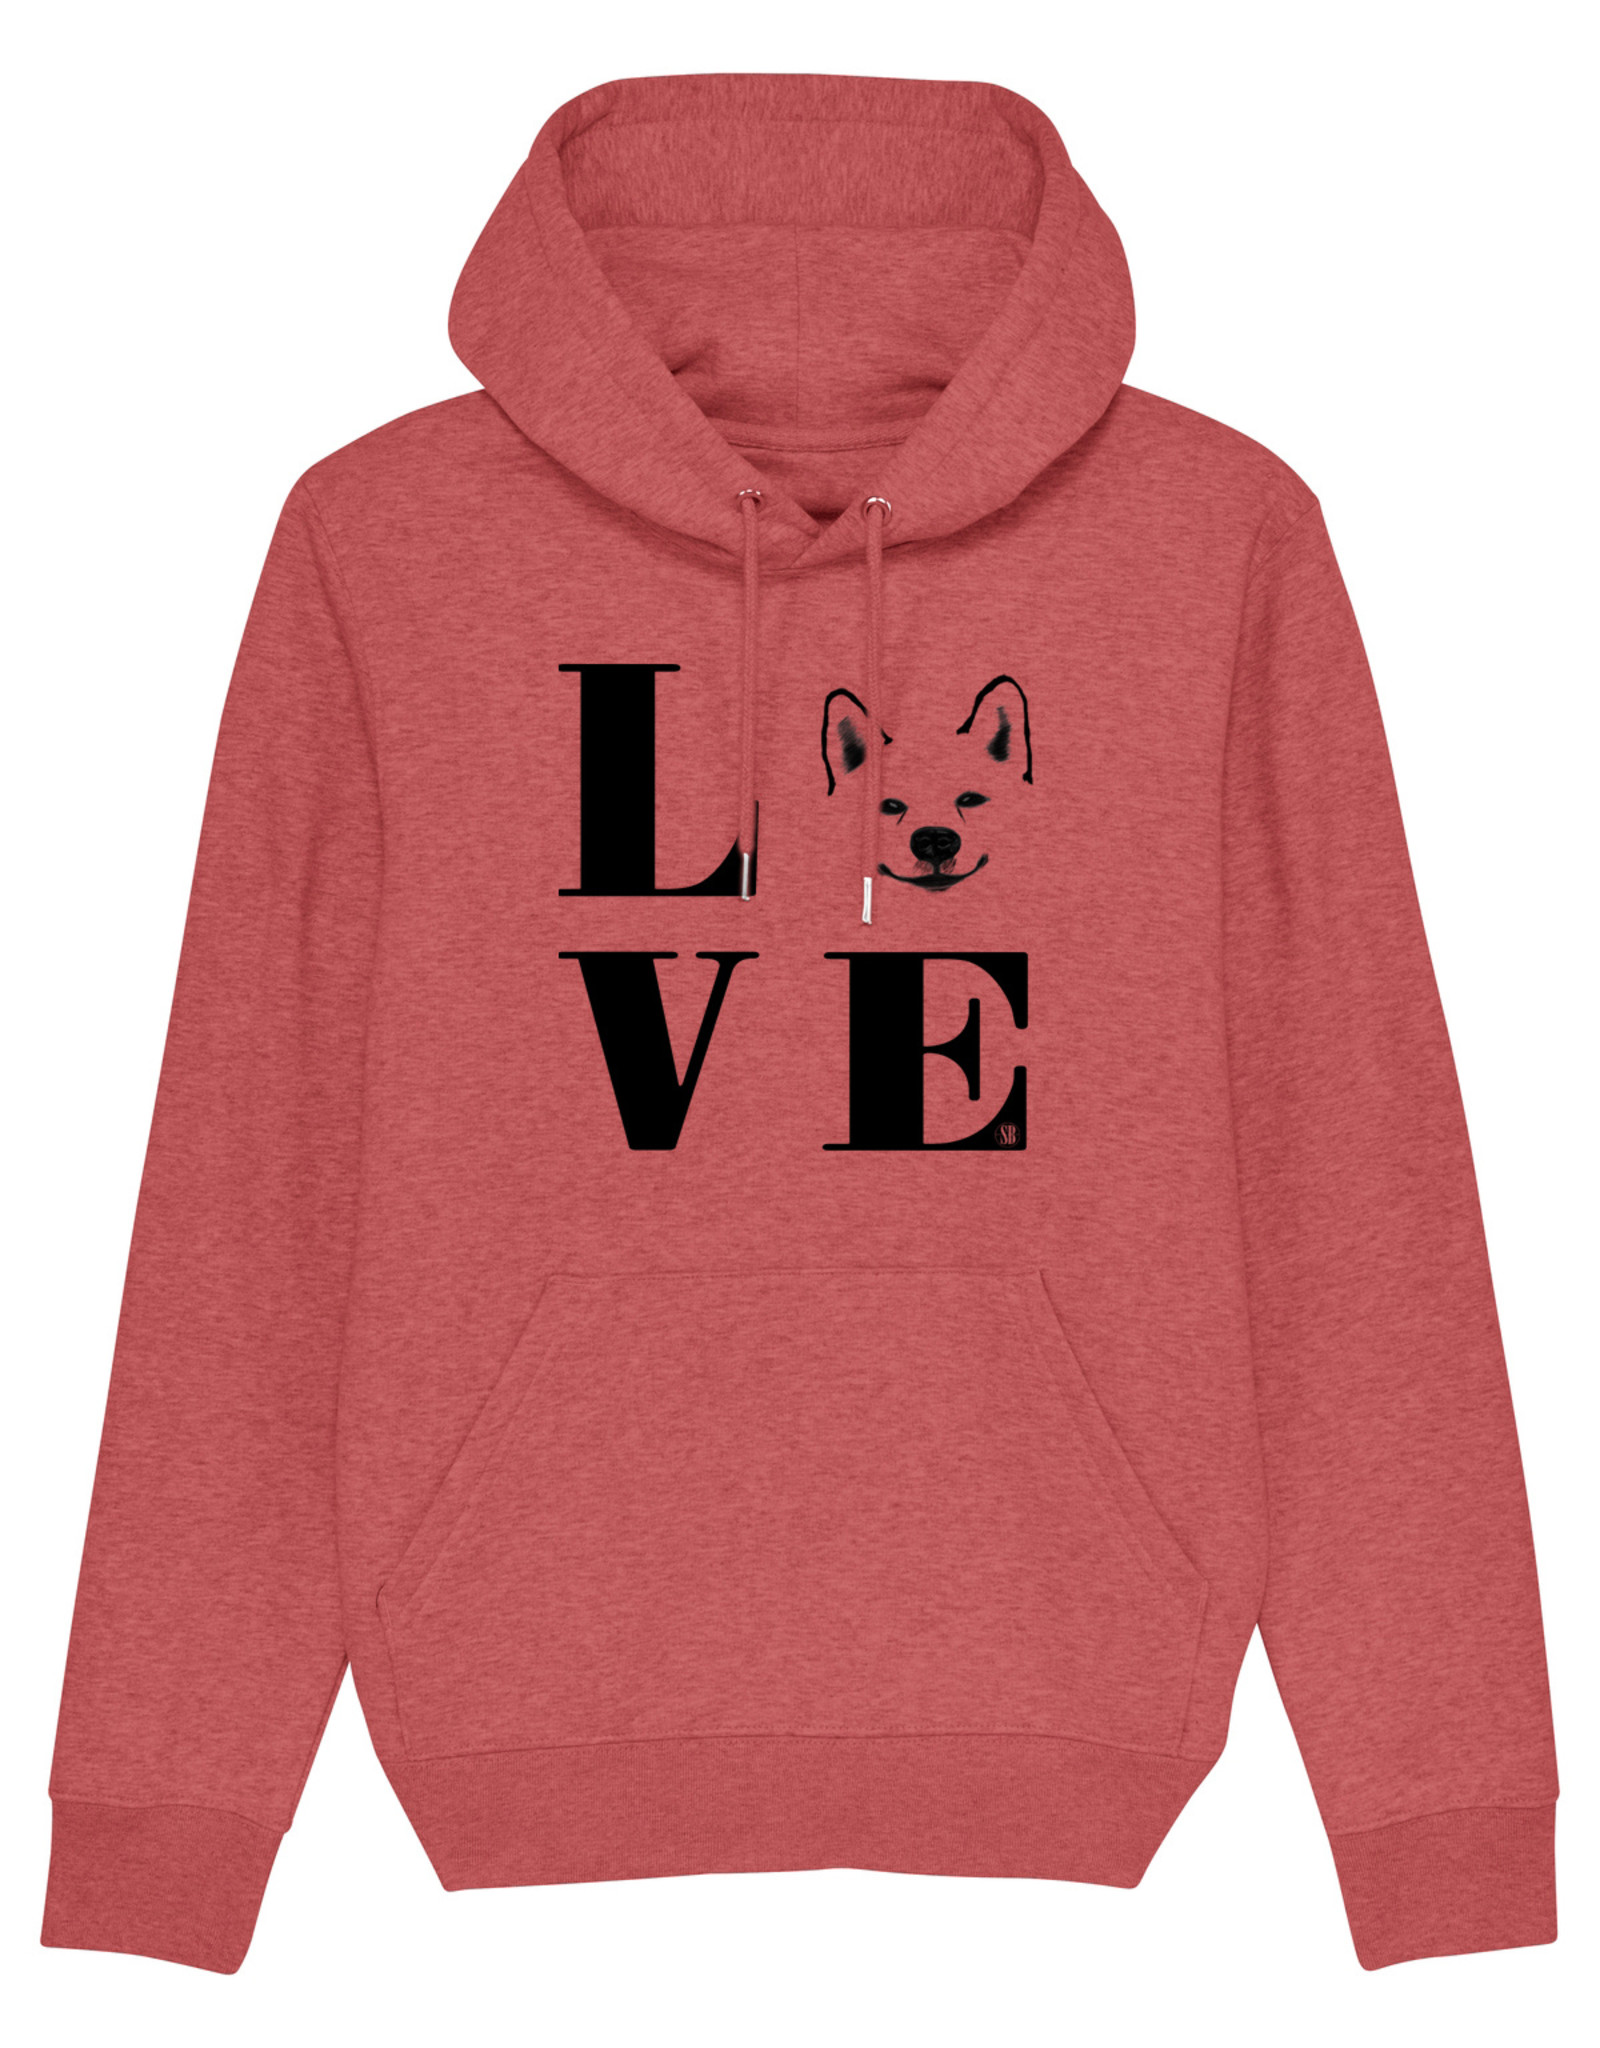 Shiba Boutique - Shiba Inu Love Dog Hoodie Sweater Men